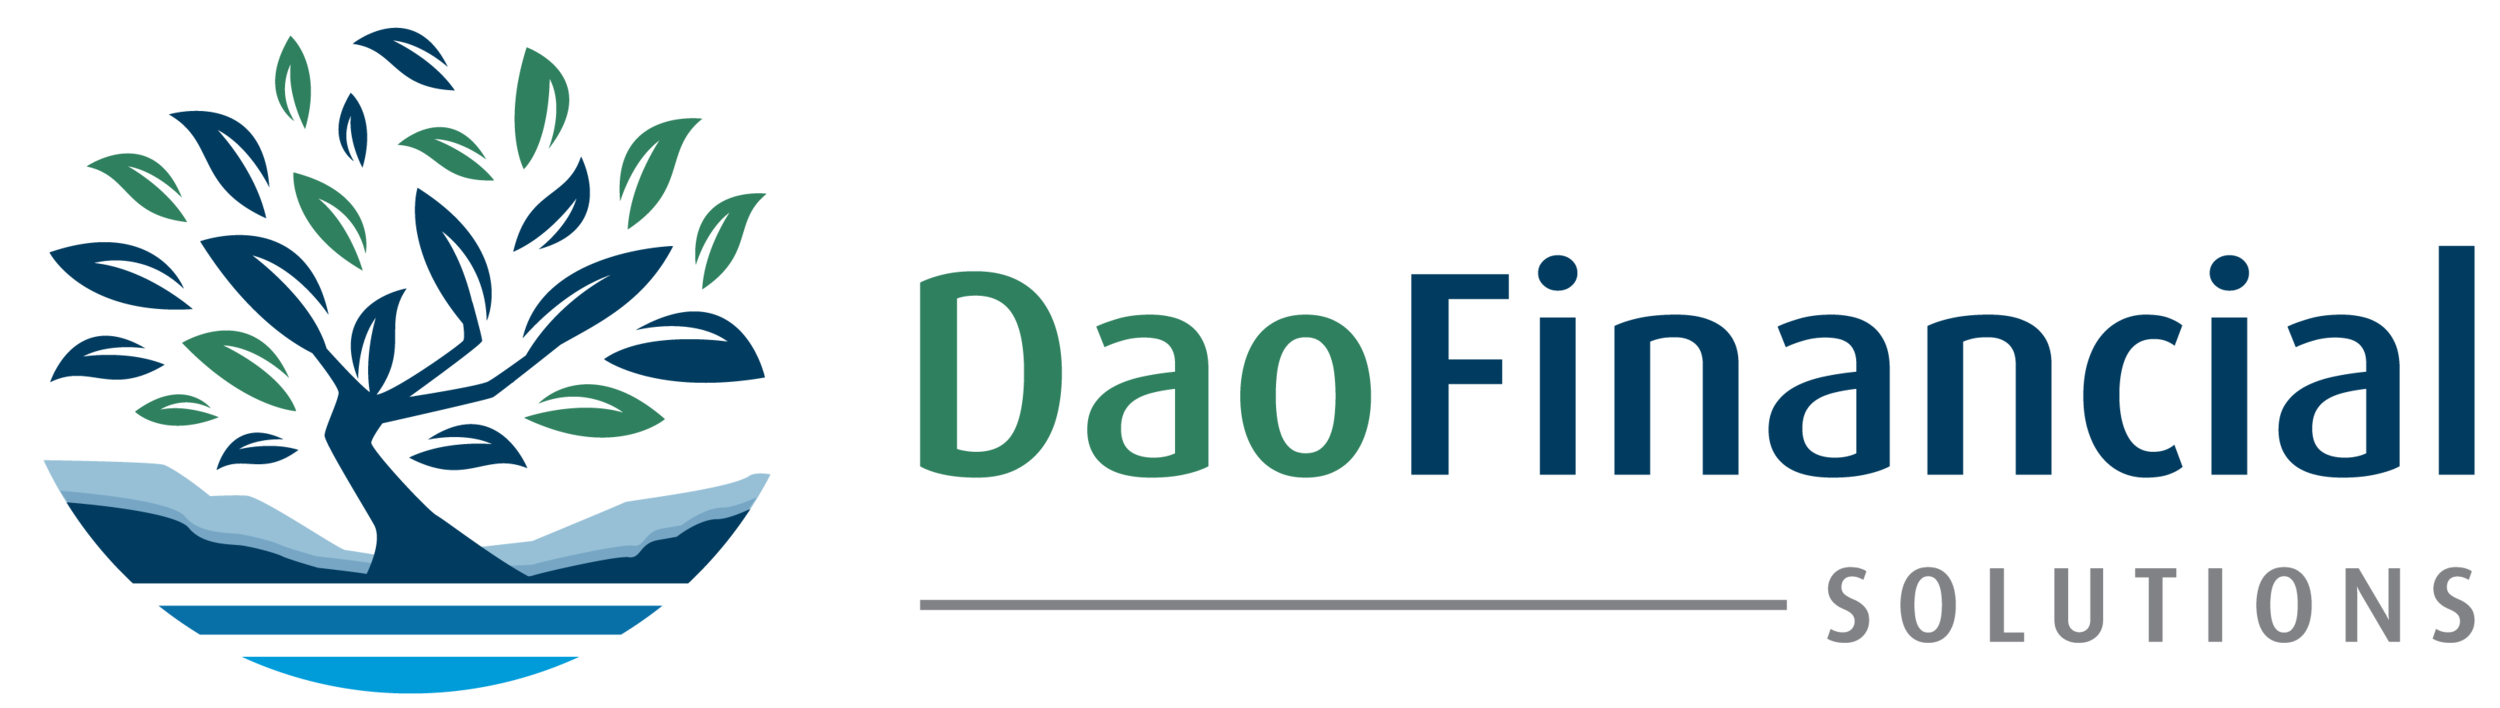 Dao Financial Solutions